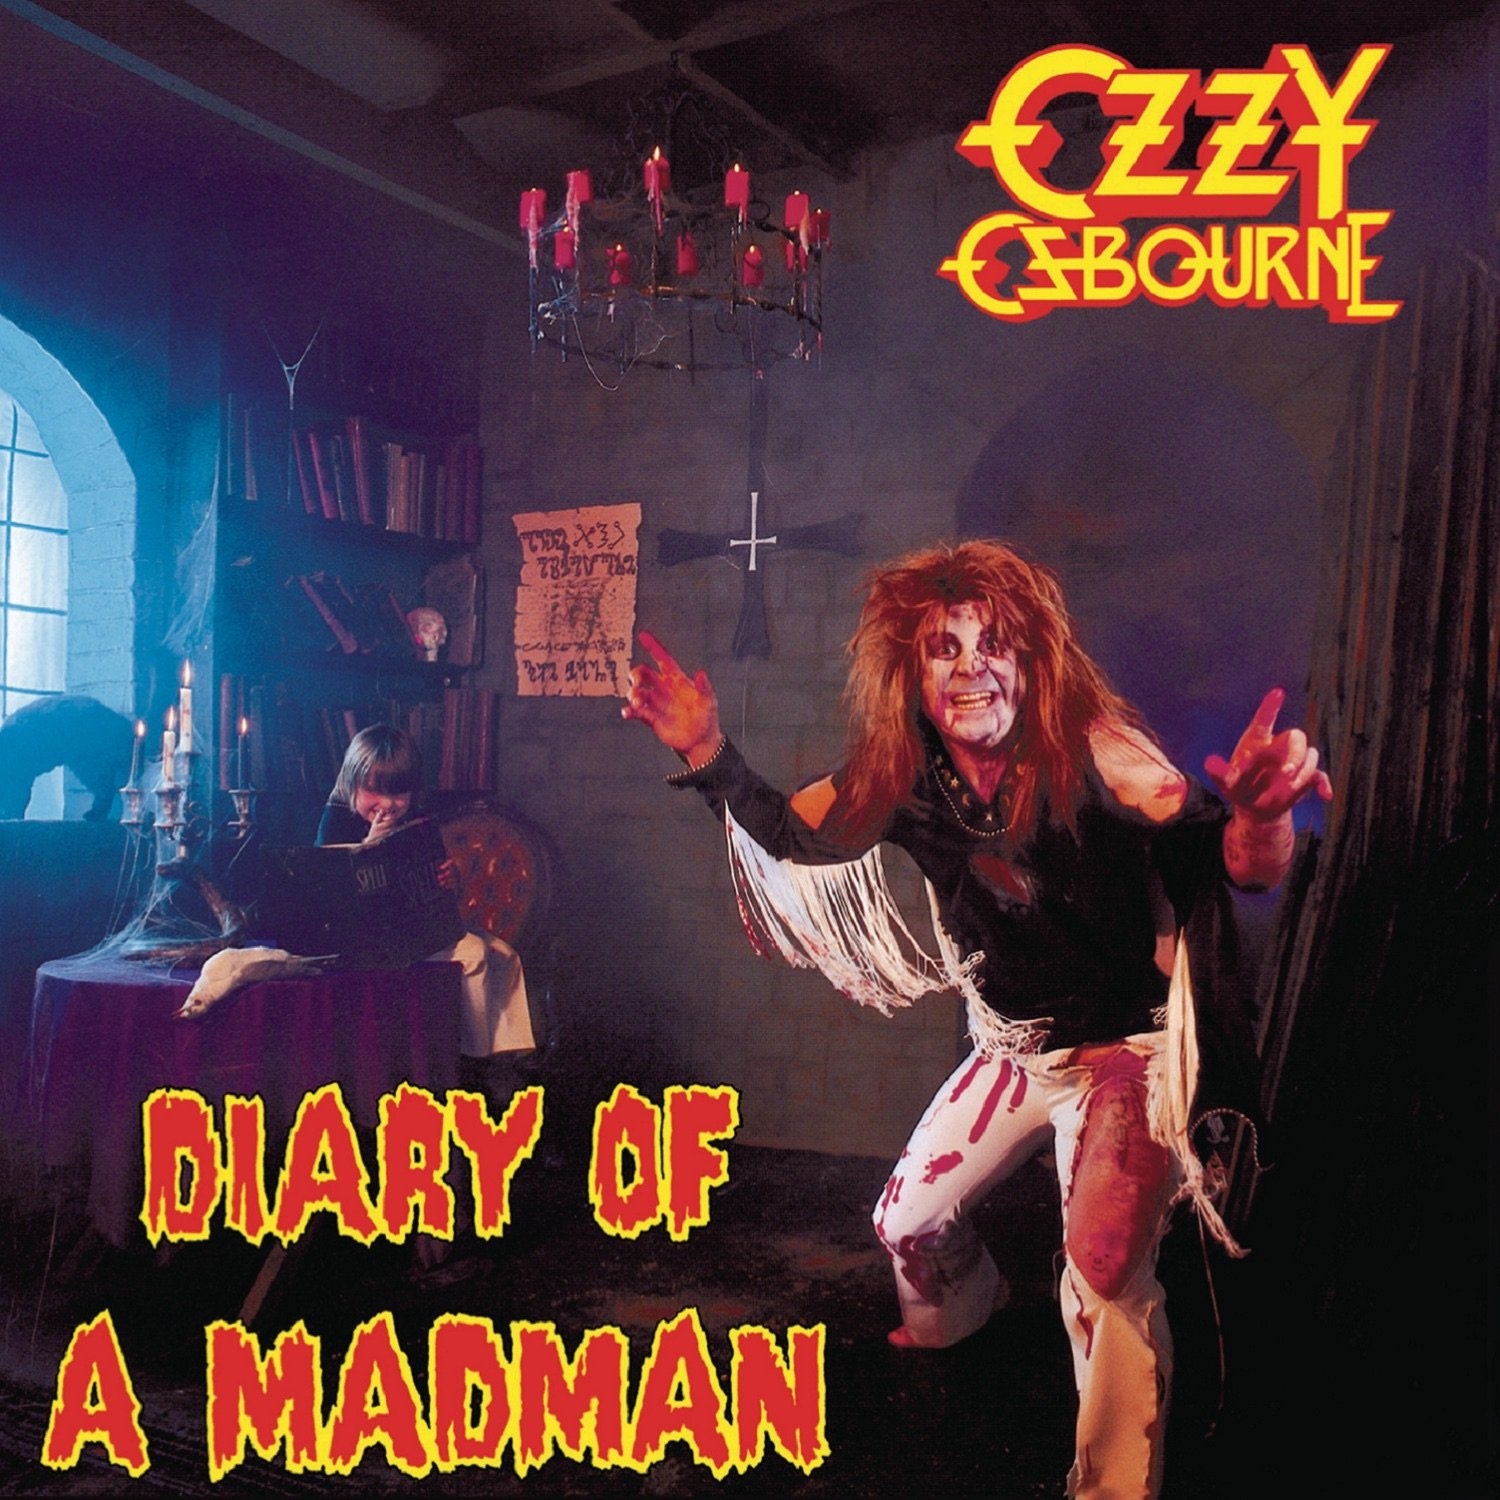 Металл Sony Osbourne, Ozzy - Diary of a Madman (40th anniversary) (Limited Marbled Vinyl) поп universal aus swift taylor speak now taylor s version violet marbled vinyl 3lp